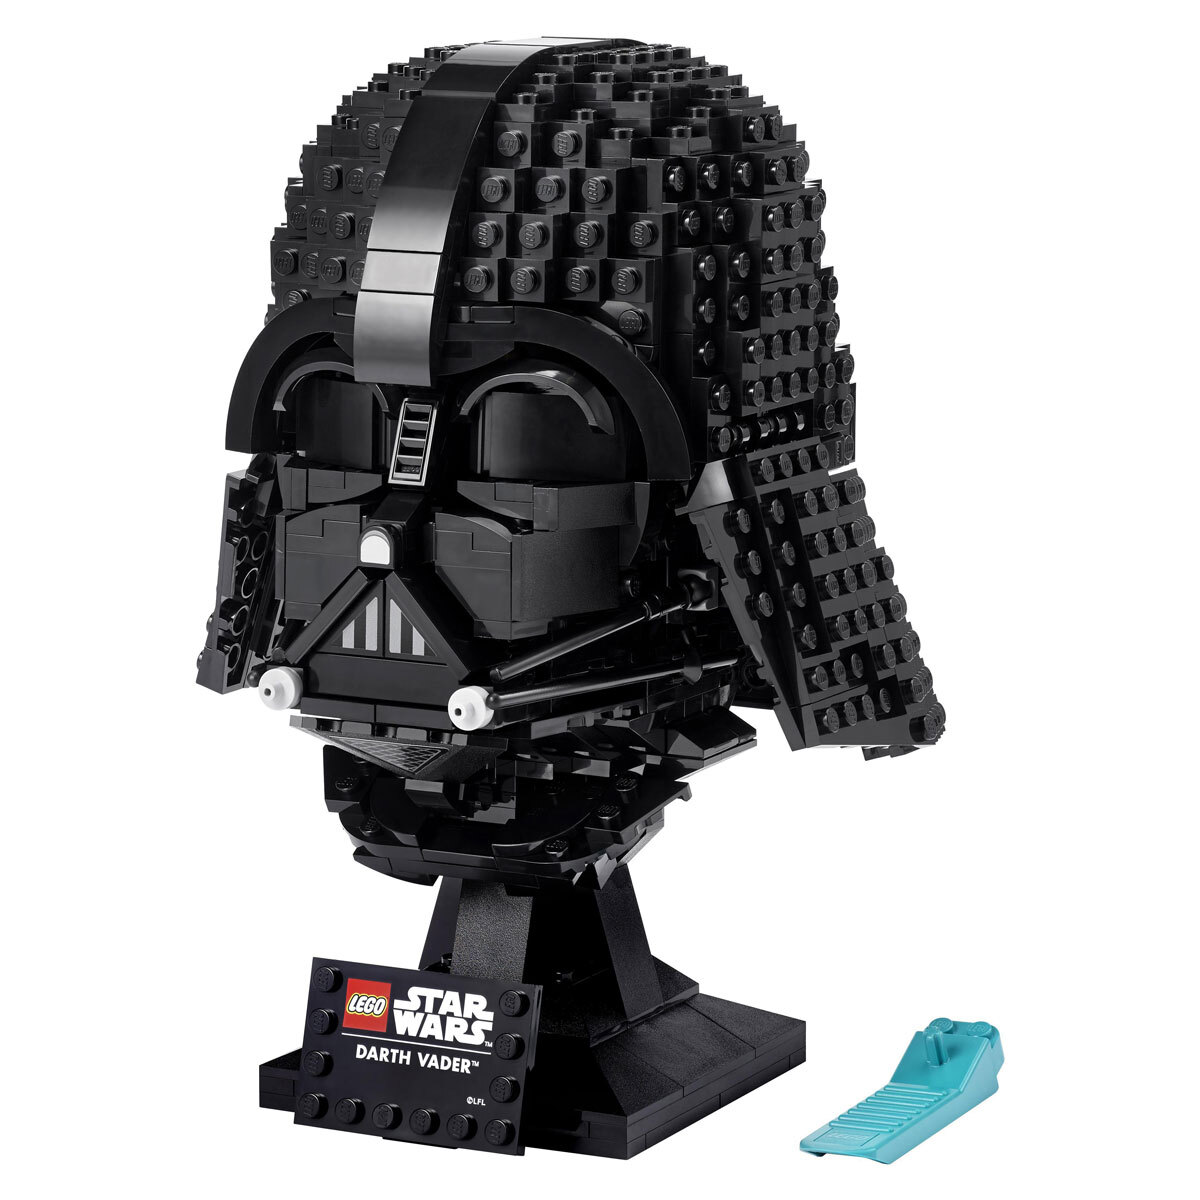 Buy LEGO Darth Vader Helmet Model 75304 Close-Up Image at Costco.co.uk